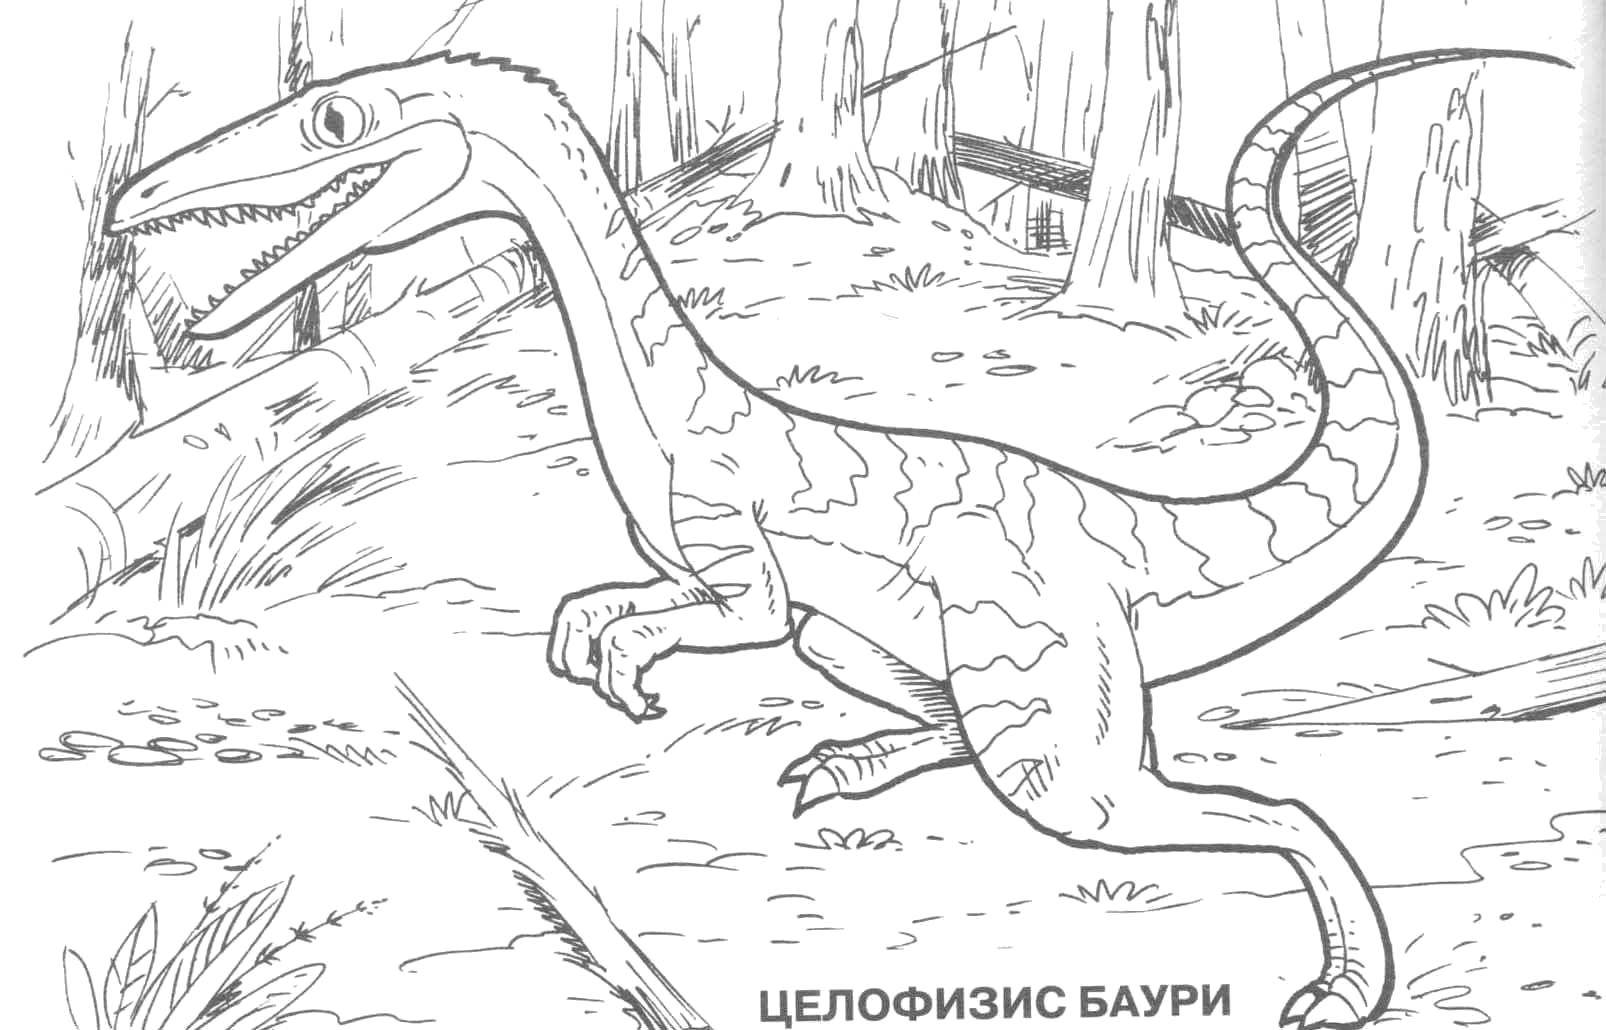 Coloring Zelovitis Bauri. Category dinosaur. Tags:  Dinosaurs.